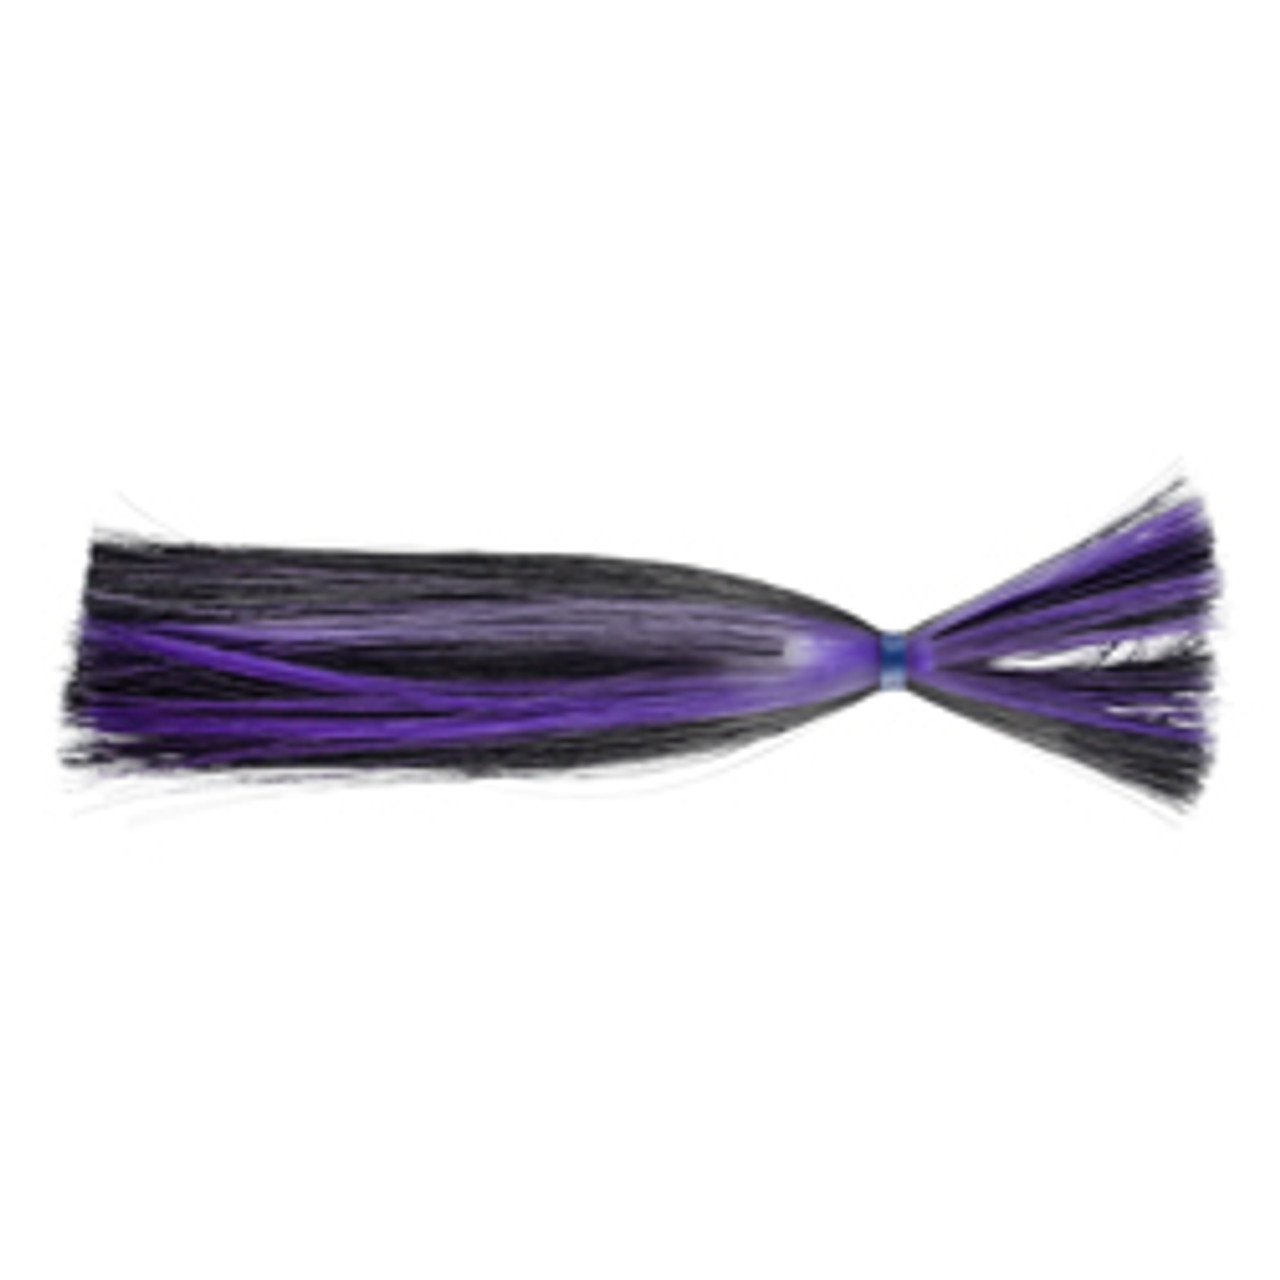 C&H CH-NSW18-1/8 Sea Witch Trolling Lure, Black/Purple Skirt, 1/8